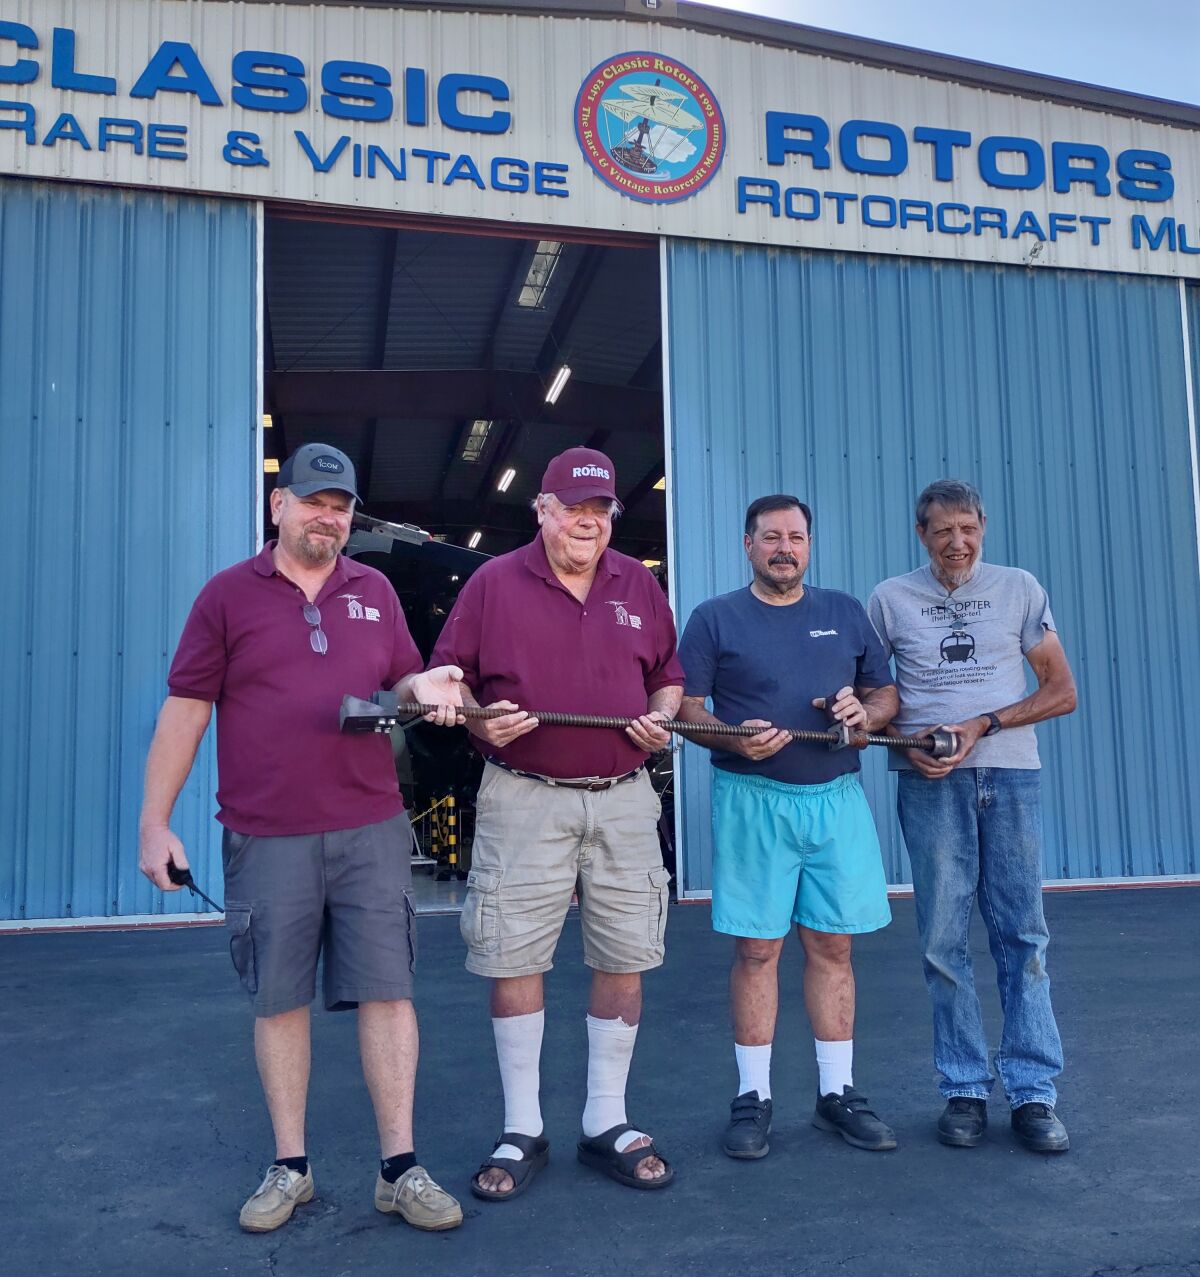 Holding a jackscrew, L-R, Troy Gesaman and Peter Von Hagen of All Day Radios, Mark DiCiero and Joe Gwizdak of Classic Rotors.